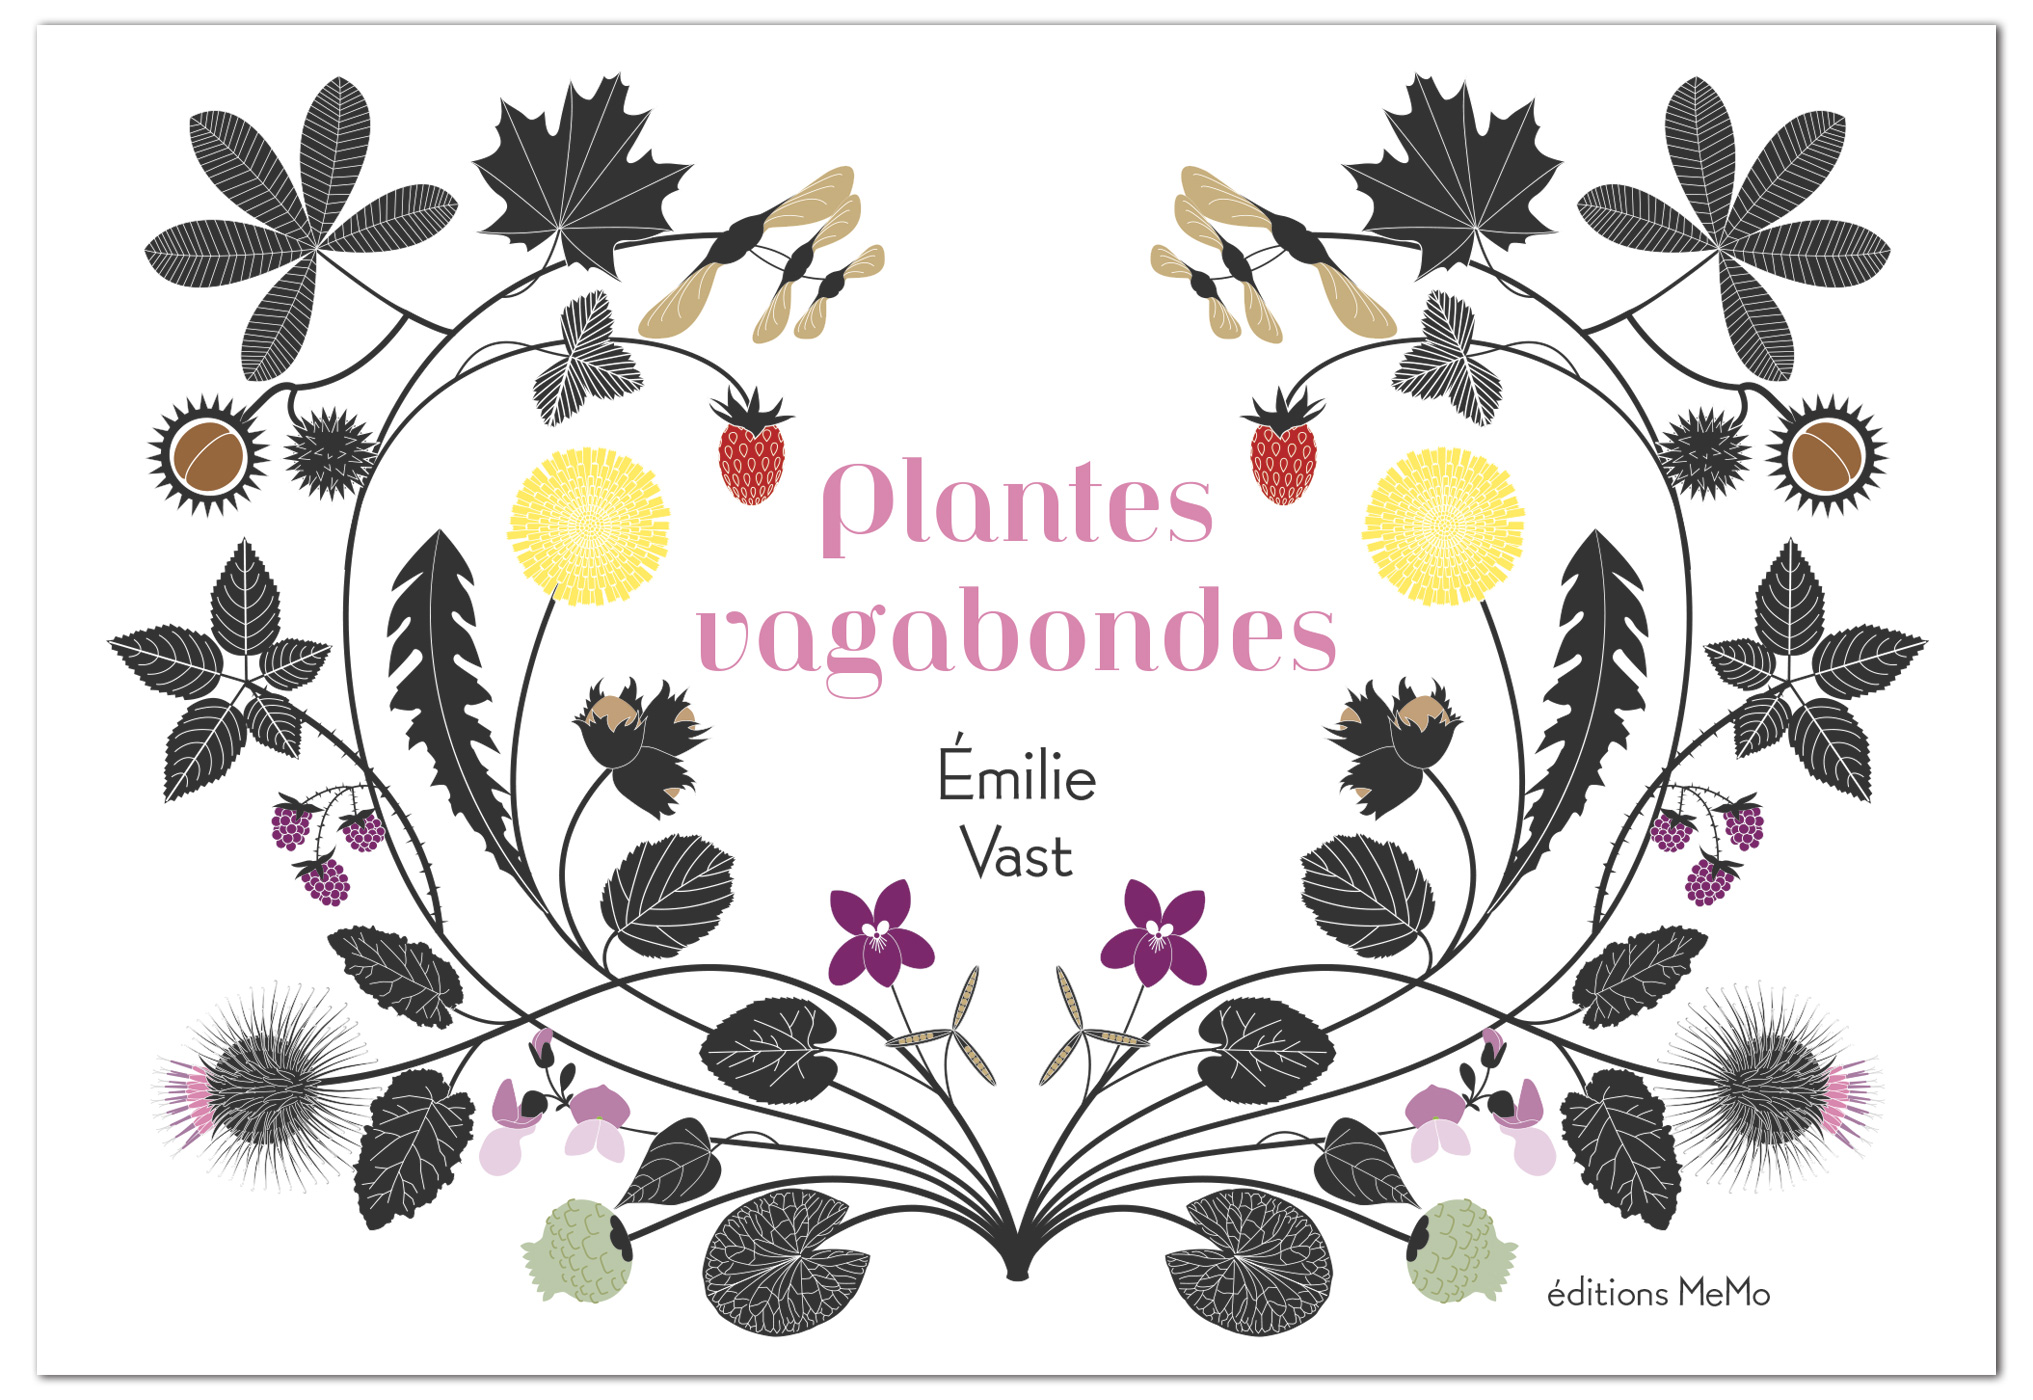 PlantesVagabondes_SP-1